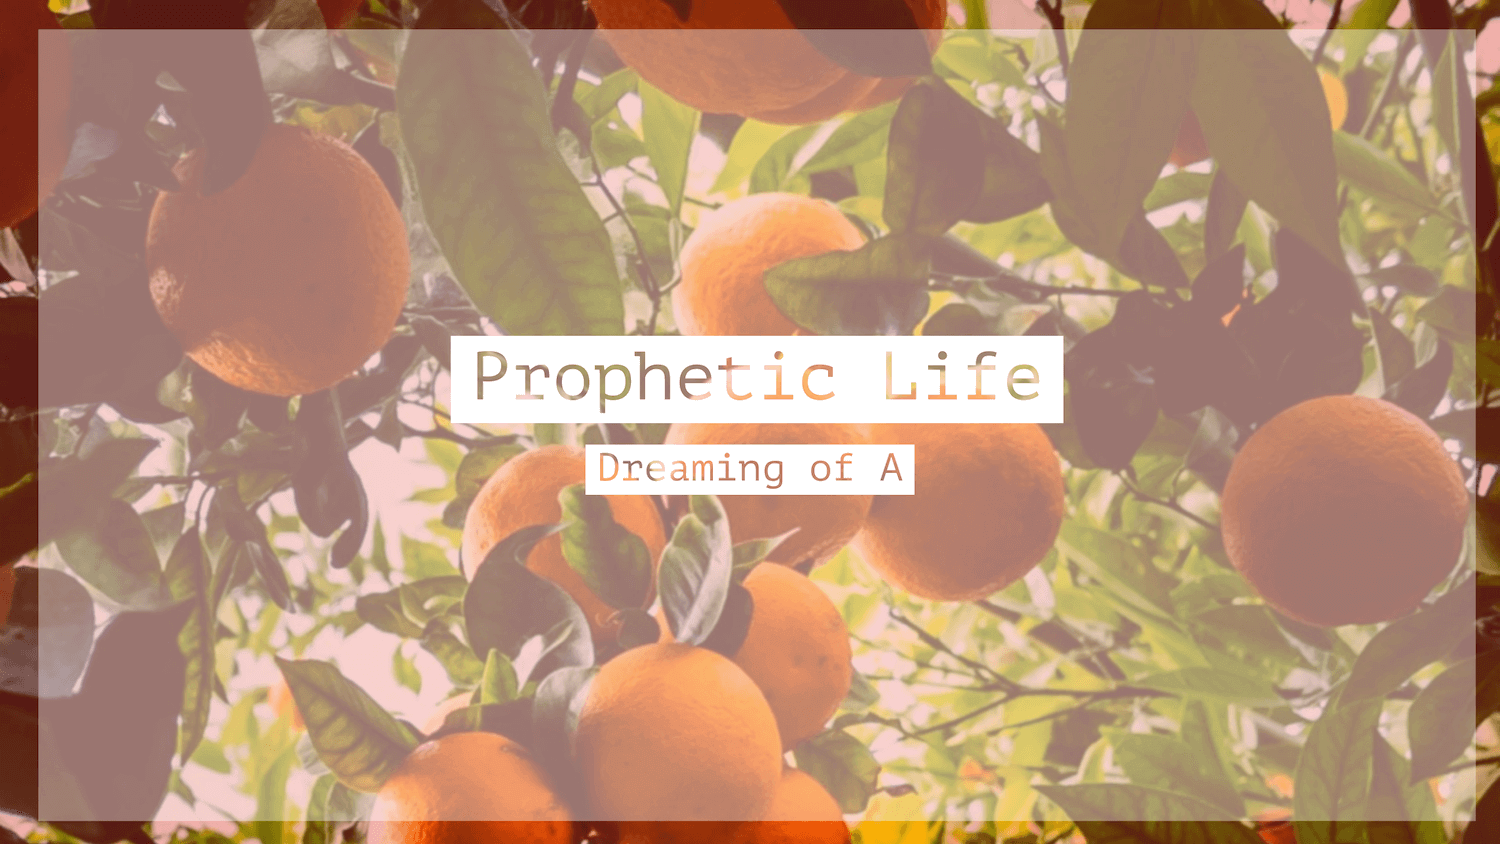 Thumbnail of an orange tree from Imam Marc's backyard